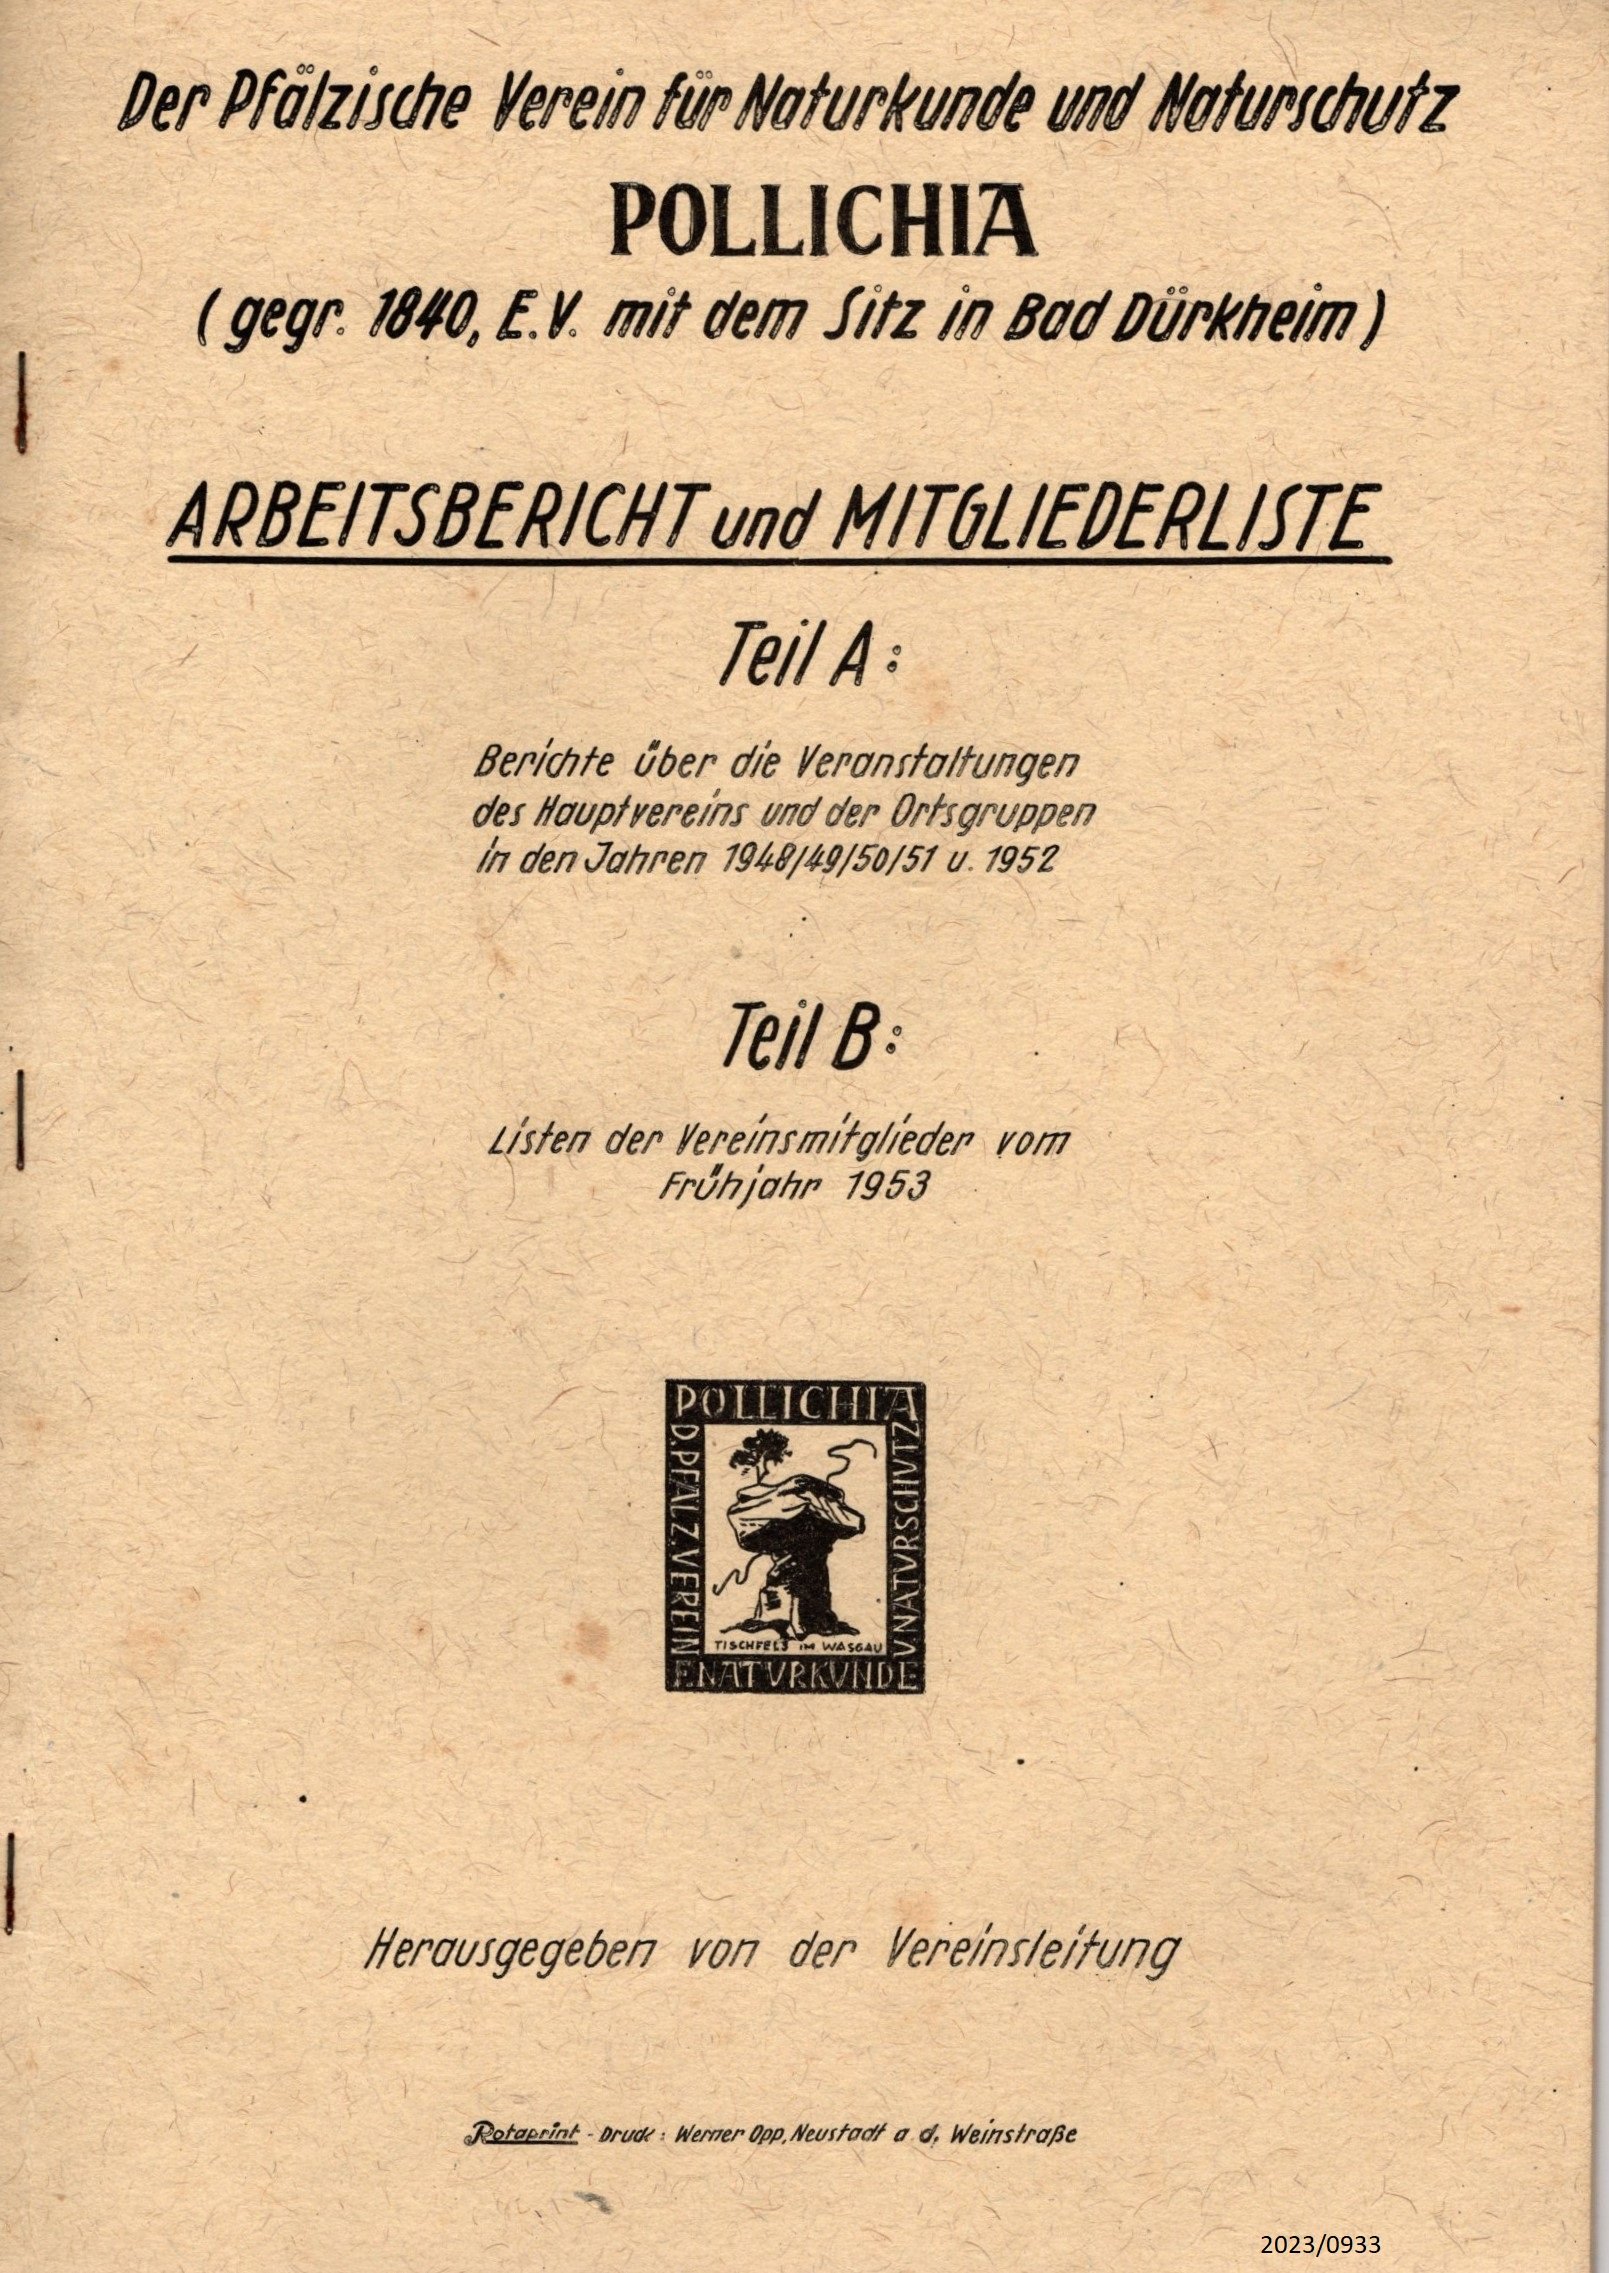 Arbeitsbericht der Pollichia 1948 bis 1952 (Stadtmuseum Bad Dürkheim im Kulturzentrum Haus Catoir CC BY-NC-SA)